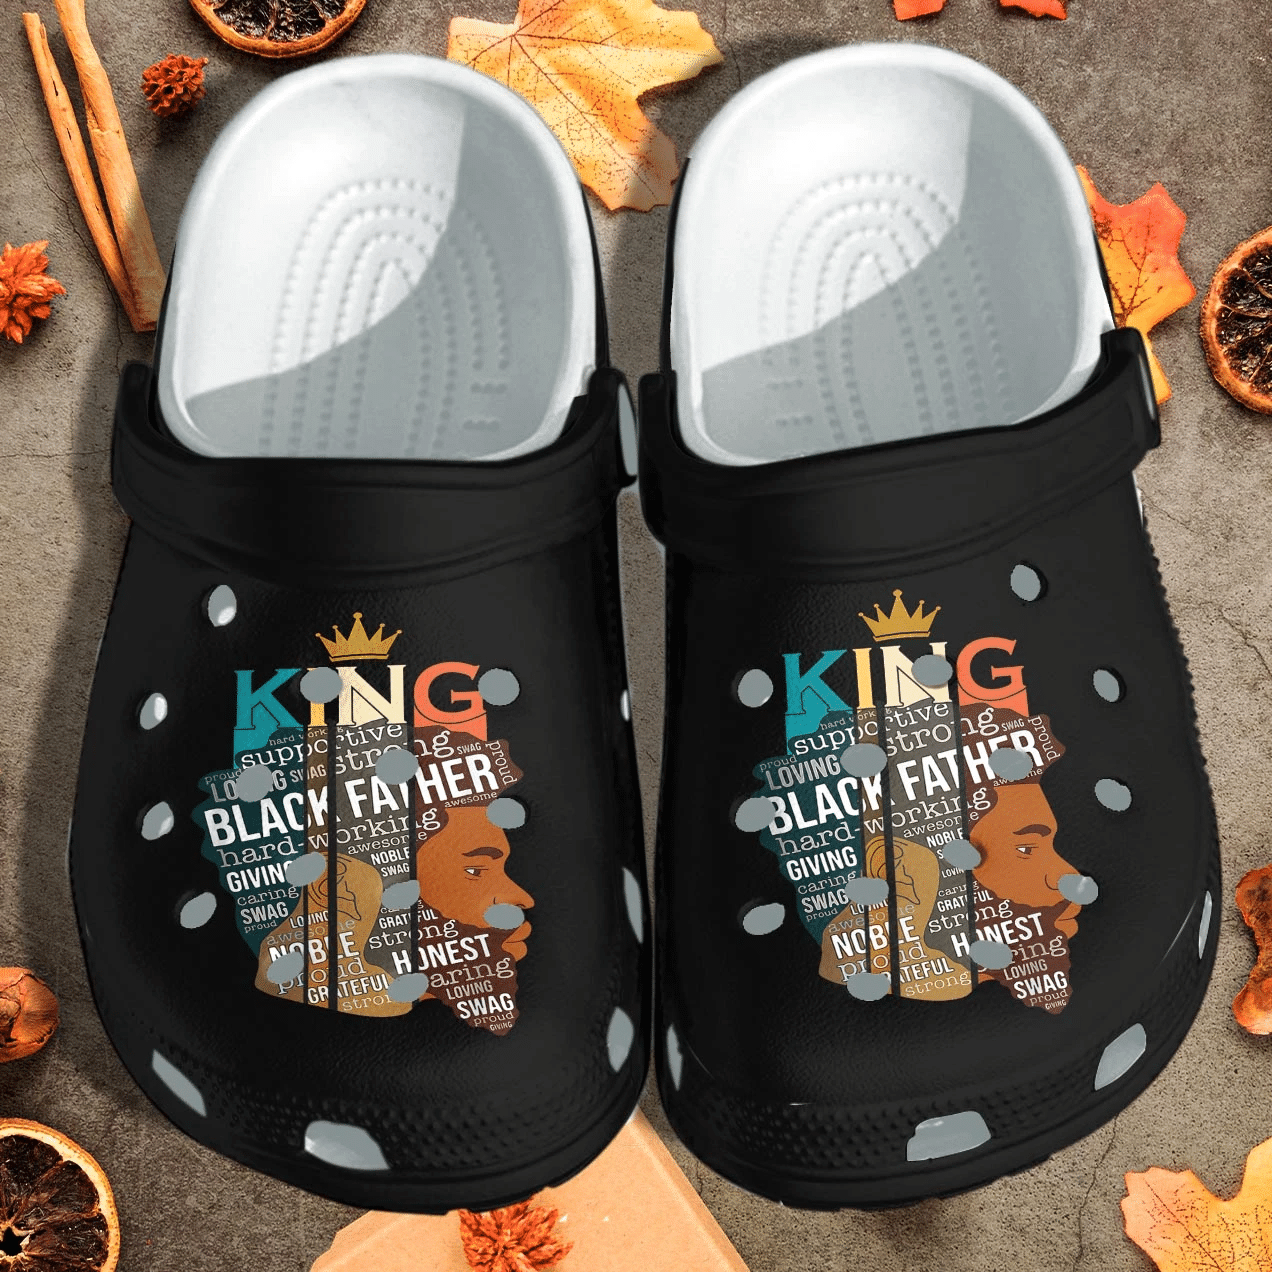 King Black Father Crocs Crocband Clogs